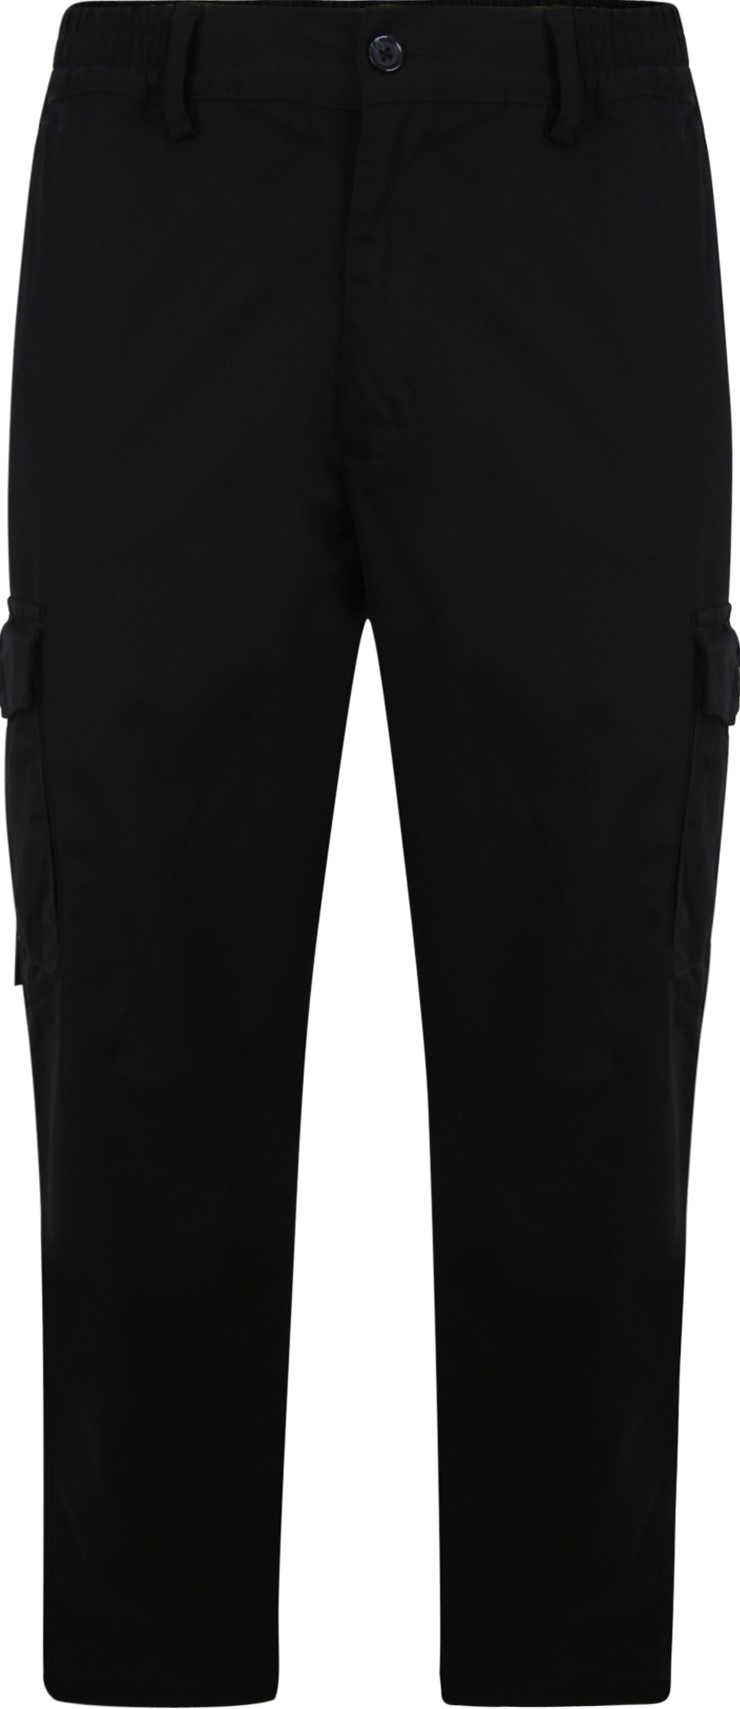 Black Elasticated Waist Trousers | New Look